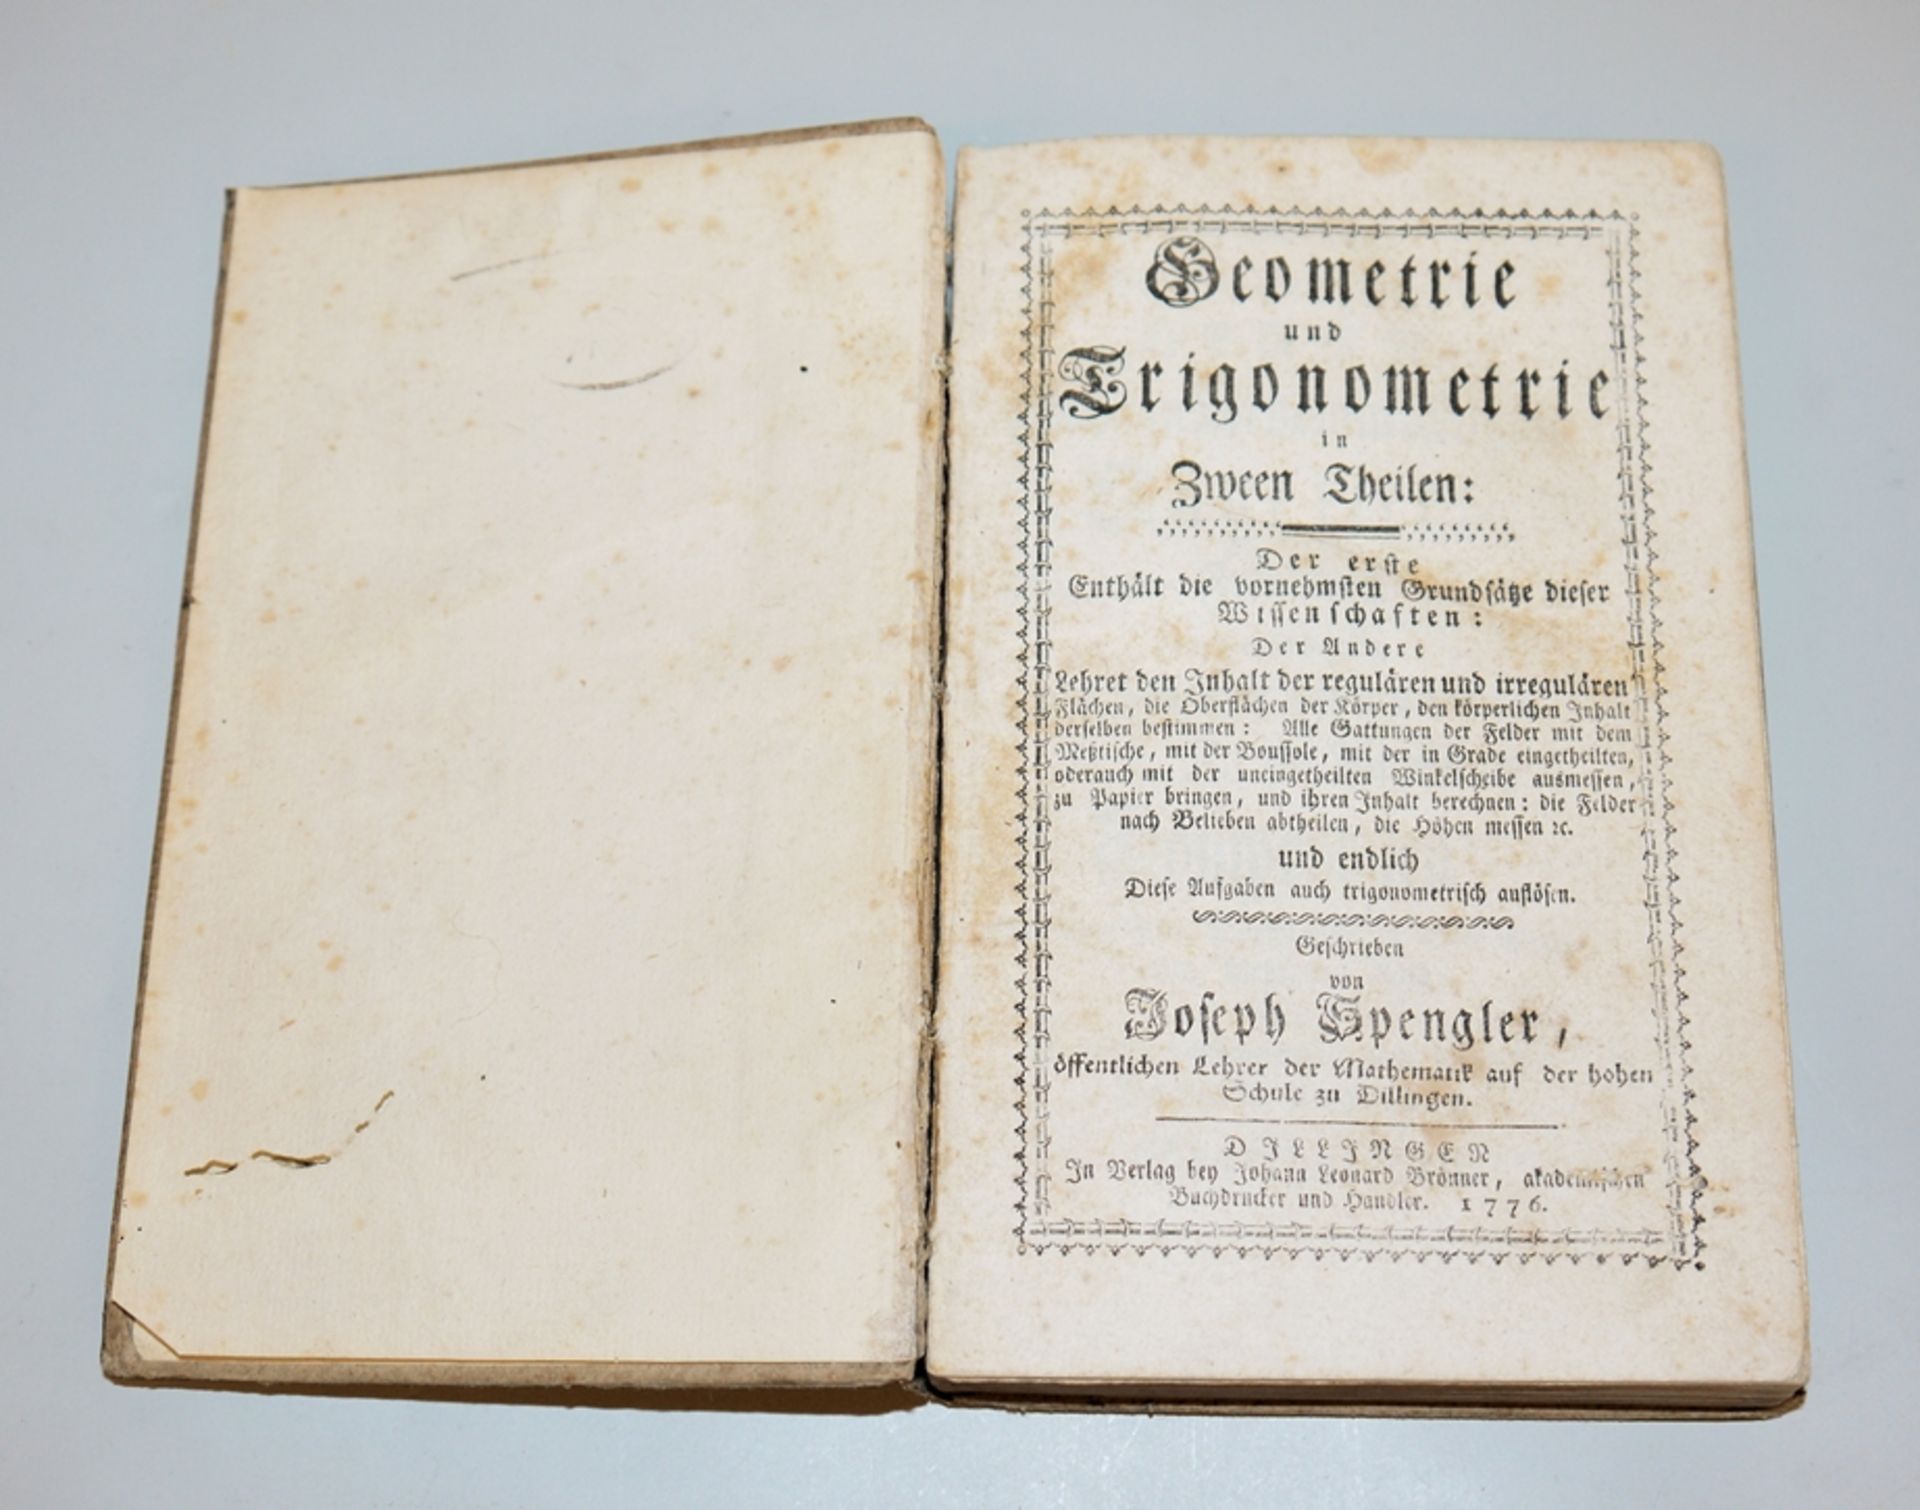 Joseph Spengler, Geometrie und Trigonometrie, 1776, rare!